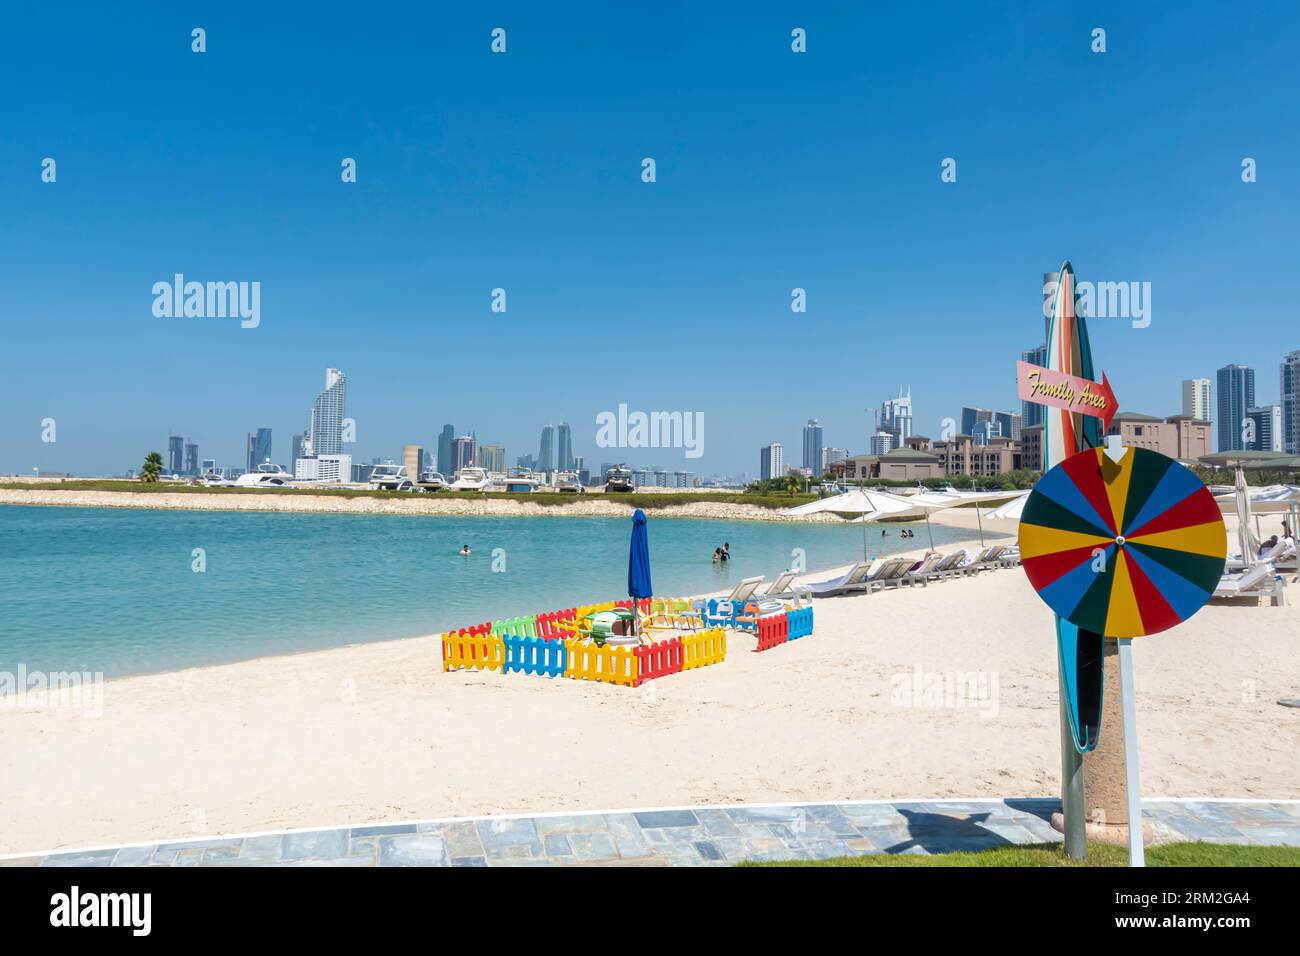 Familienbereich am Strand in Bahrain Bay, Ritz Carlton Hotel Beach Stockfoto